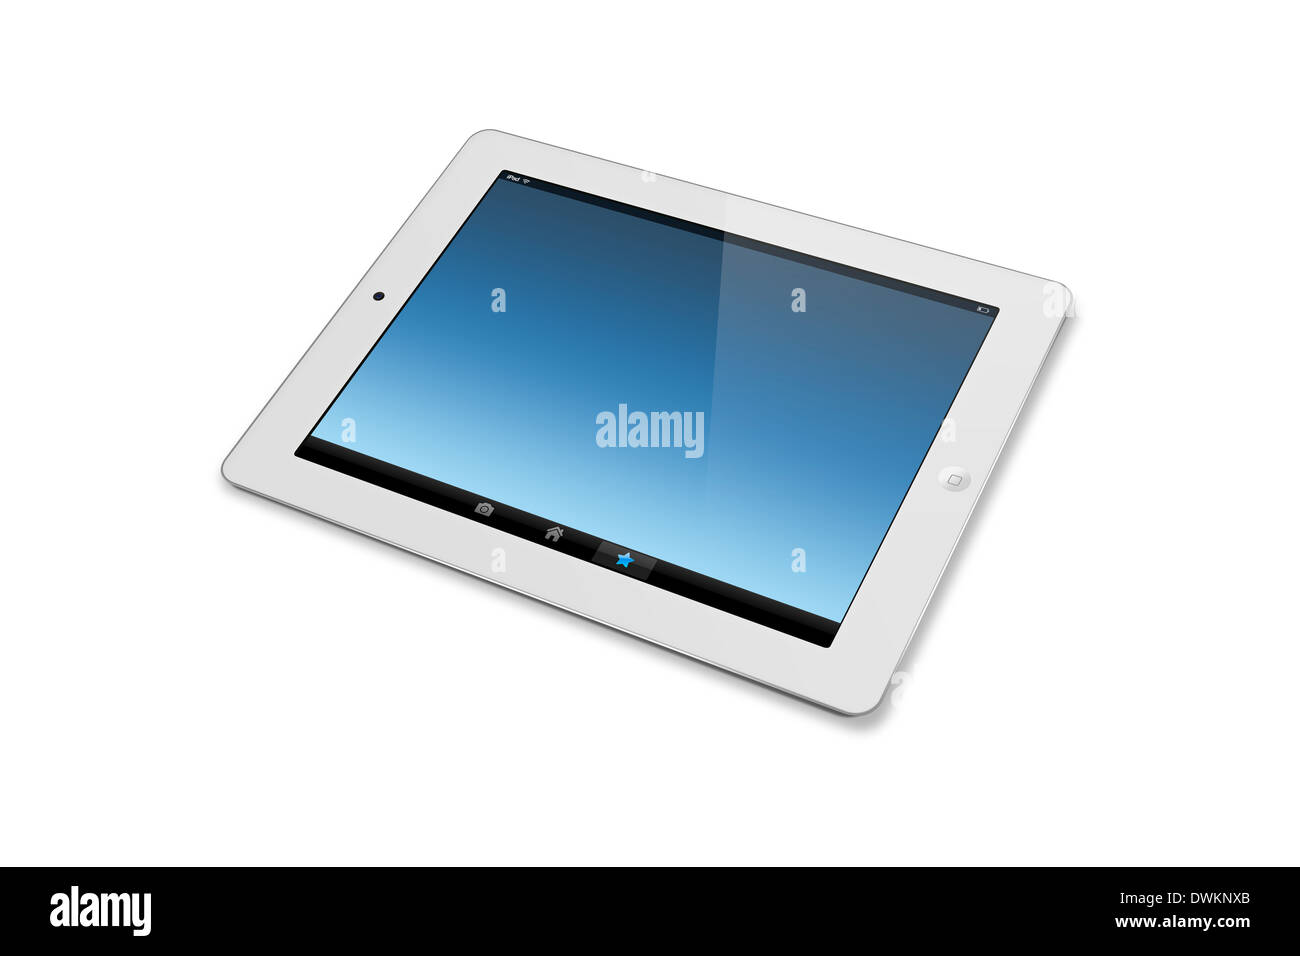 Tablet ipad 2, digitally generated image. Stock Photo